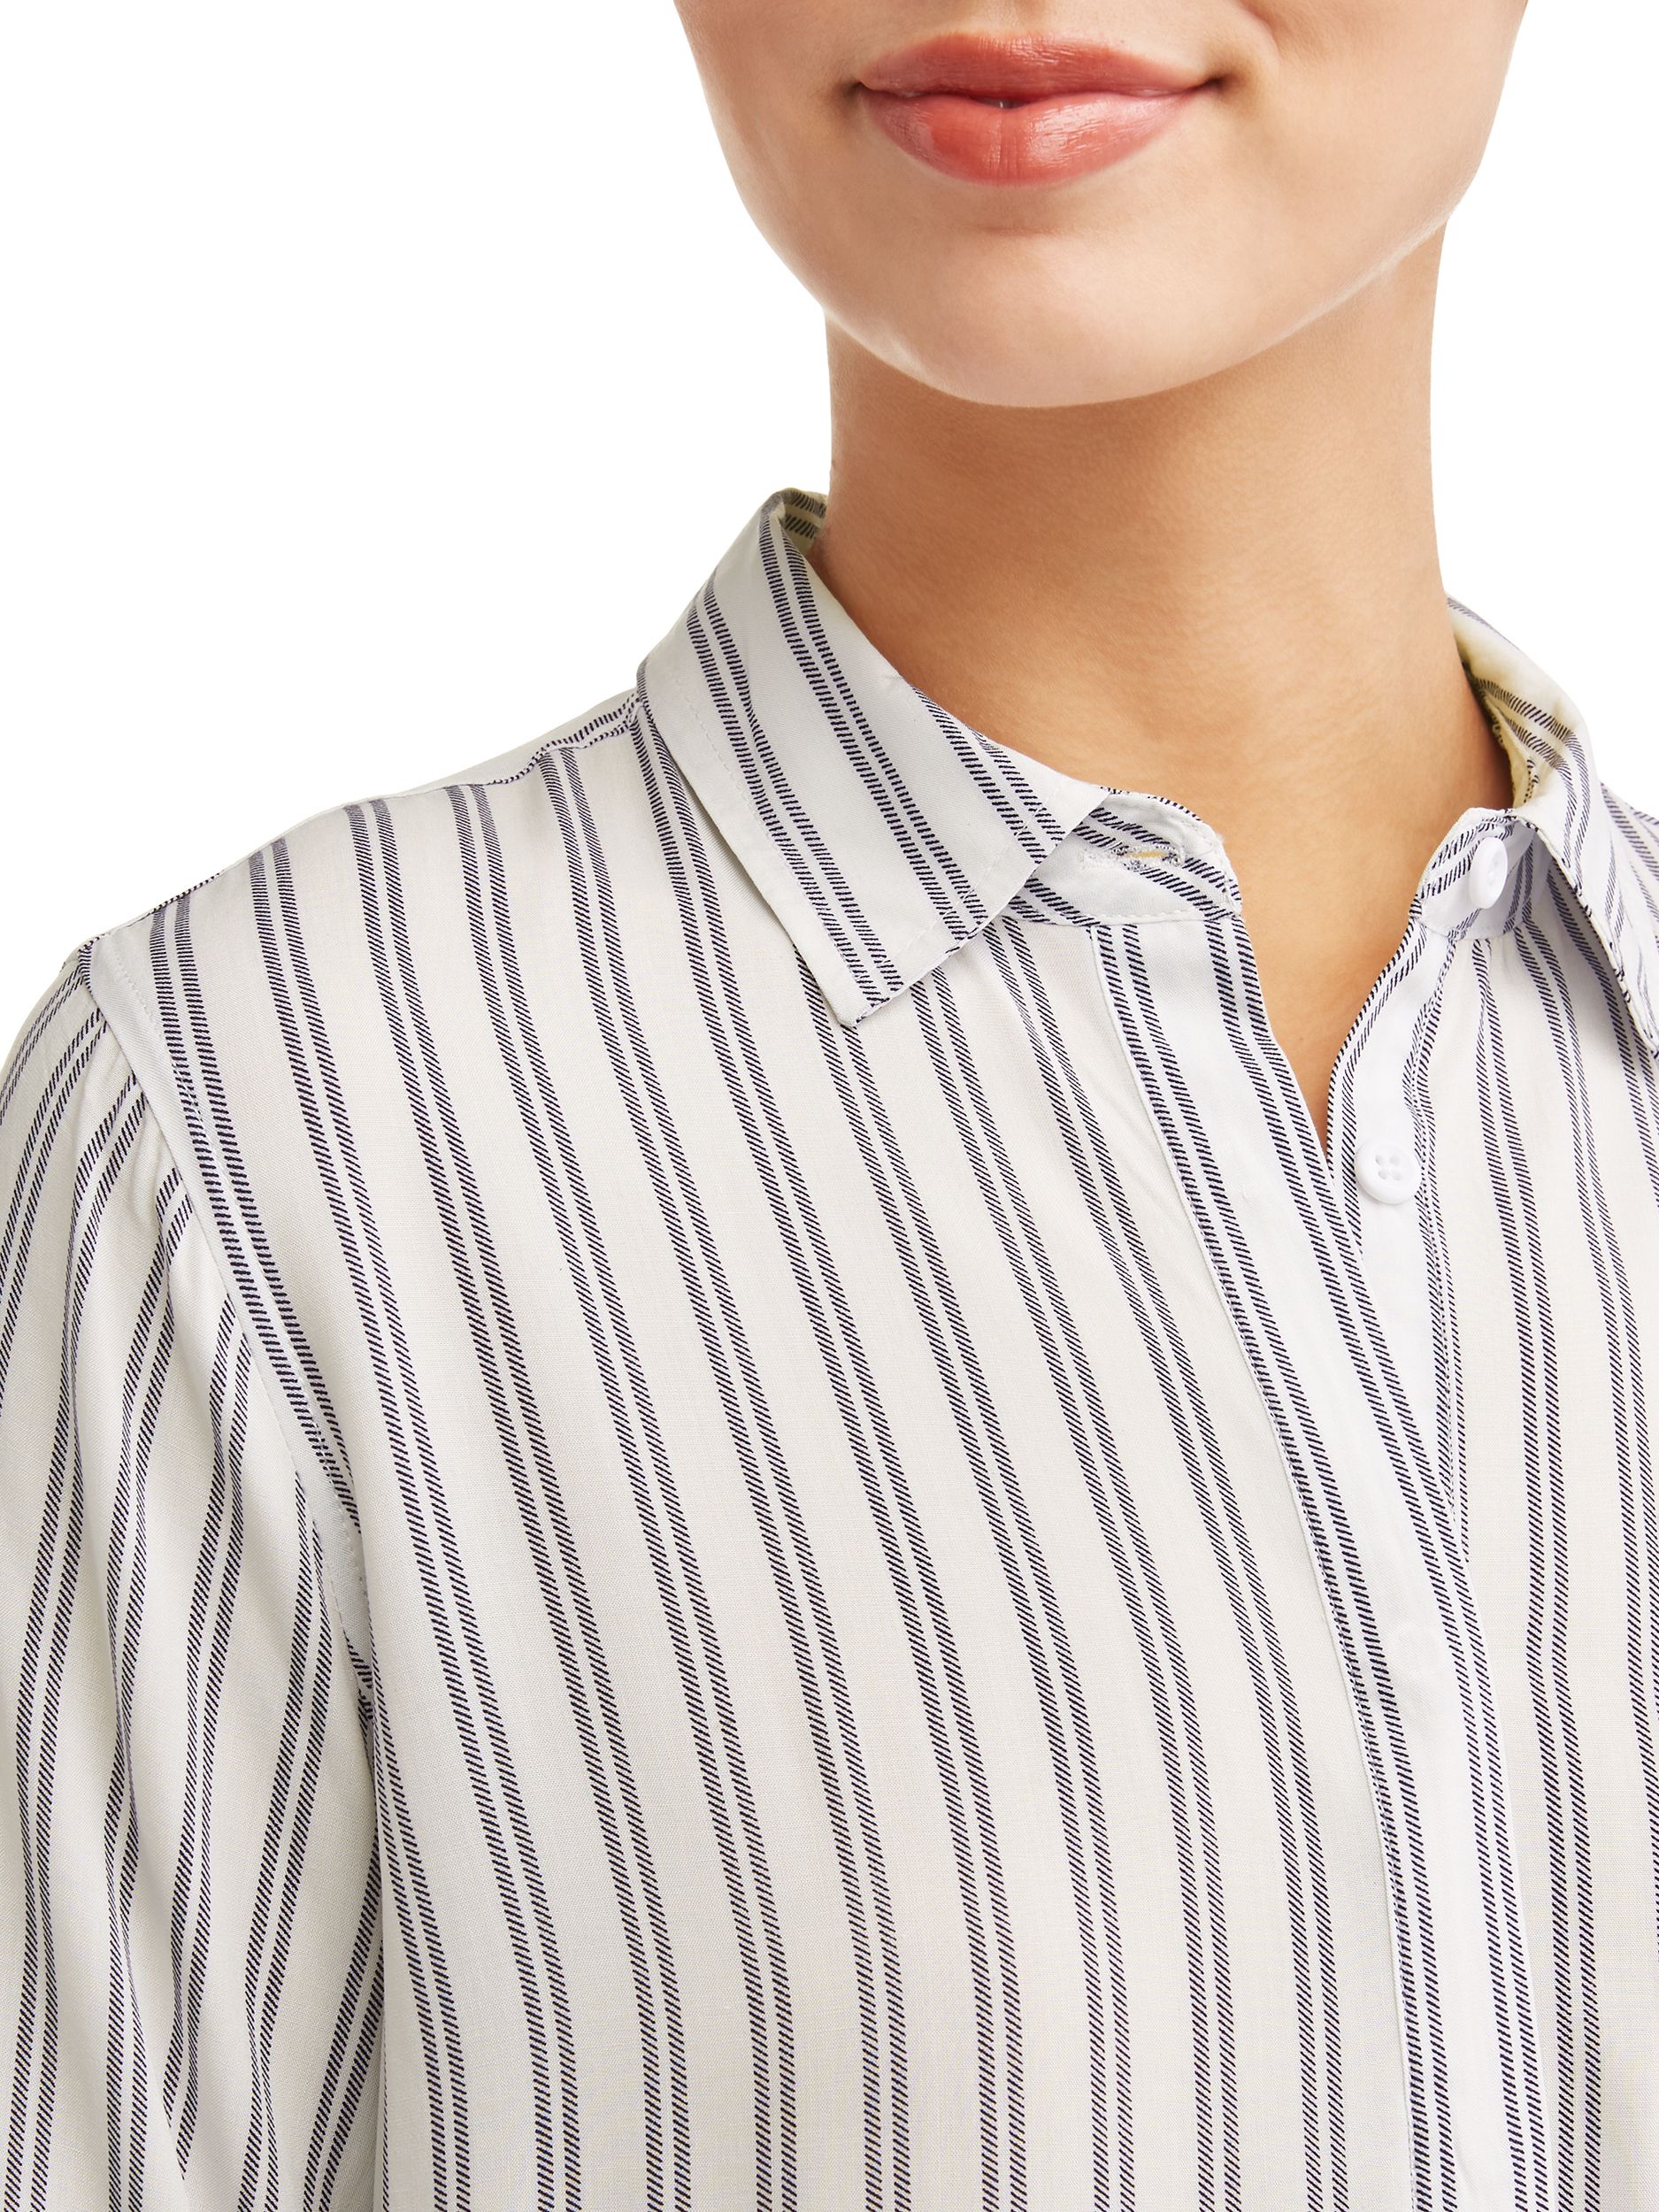 Women's Vertical Stripe Popover - image 4 of 4